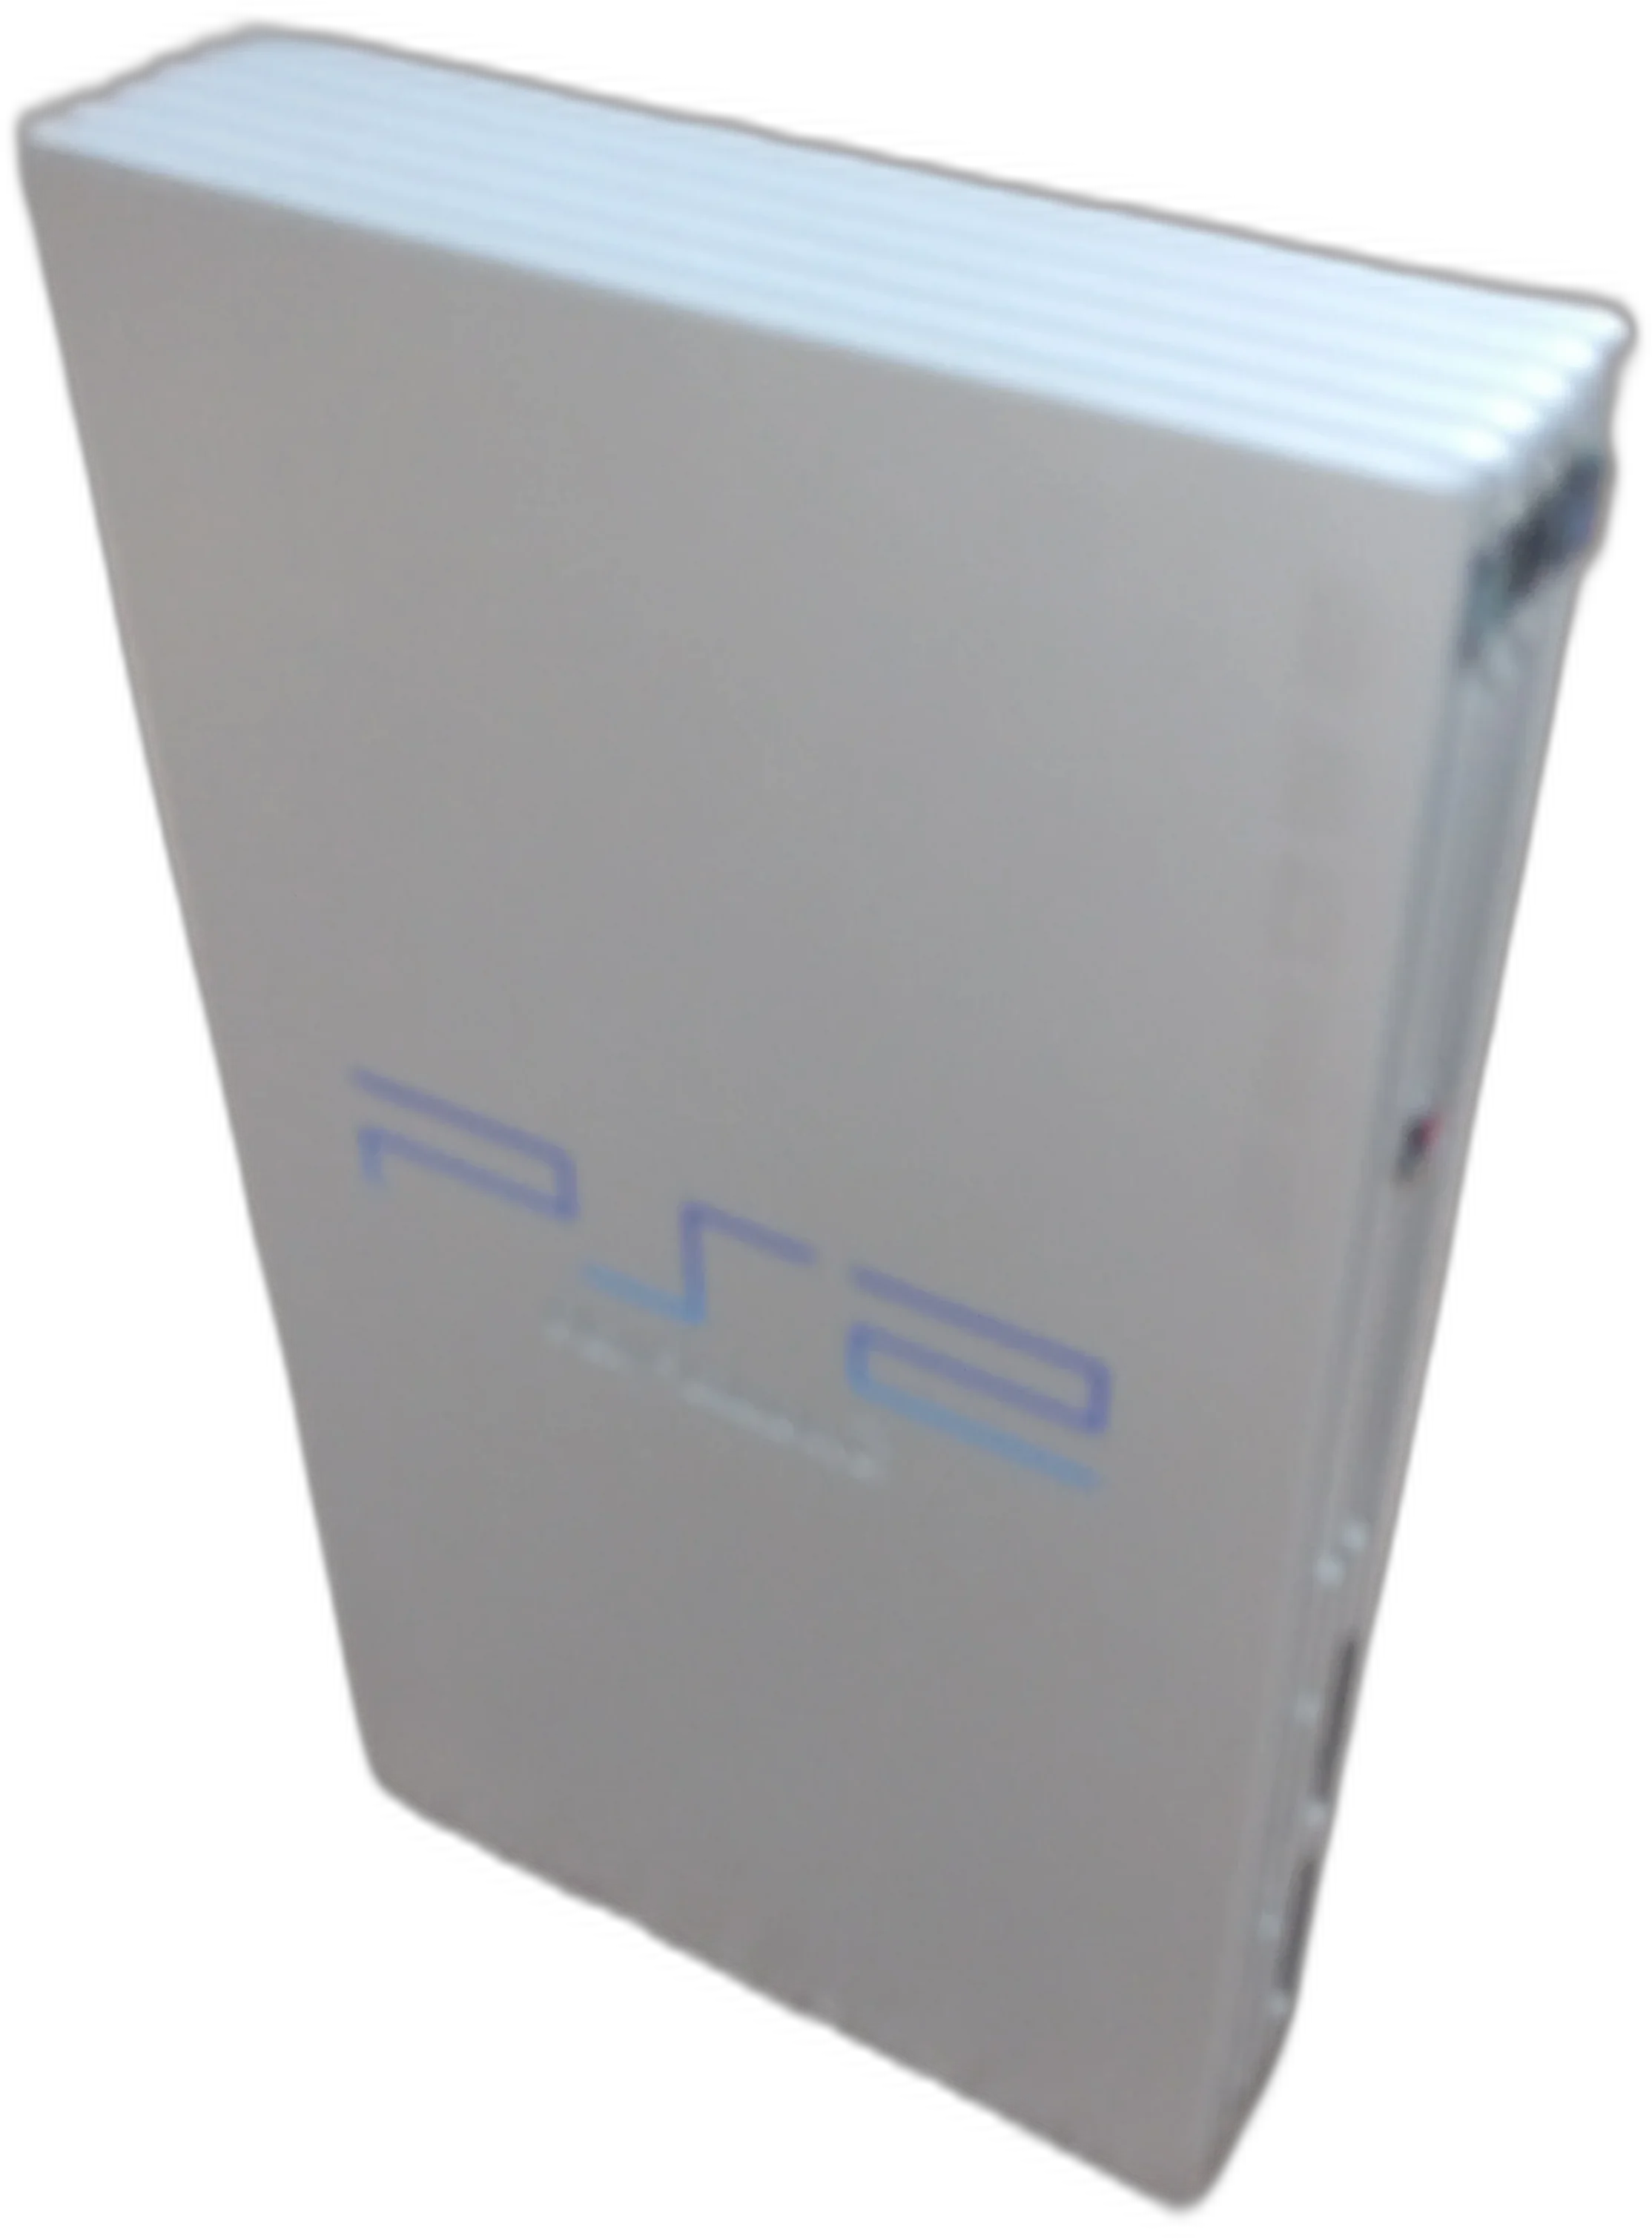  Sony PlayStation 2 Satin Silver Console [EU]